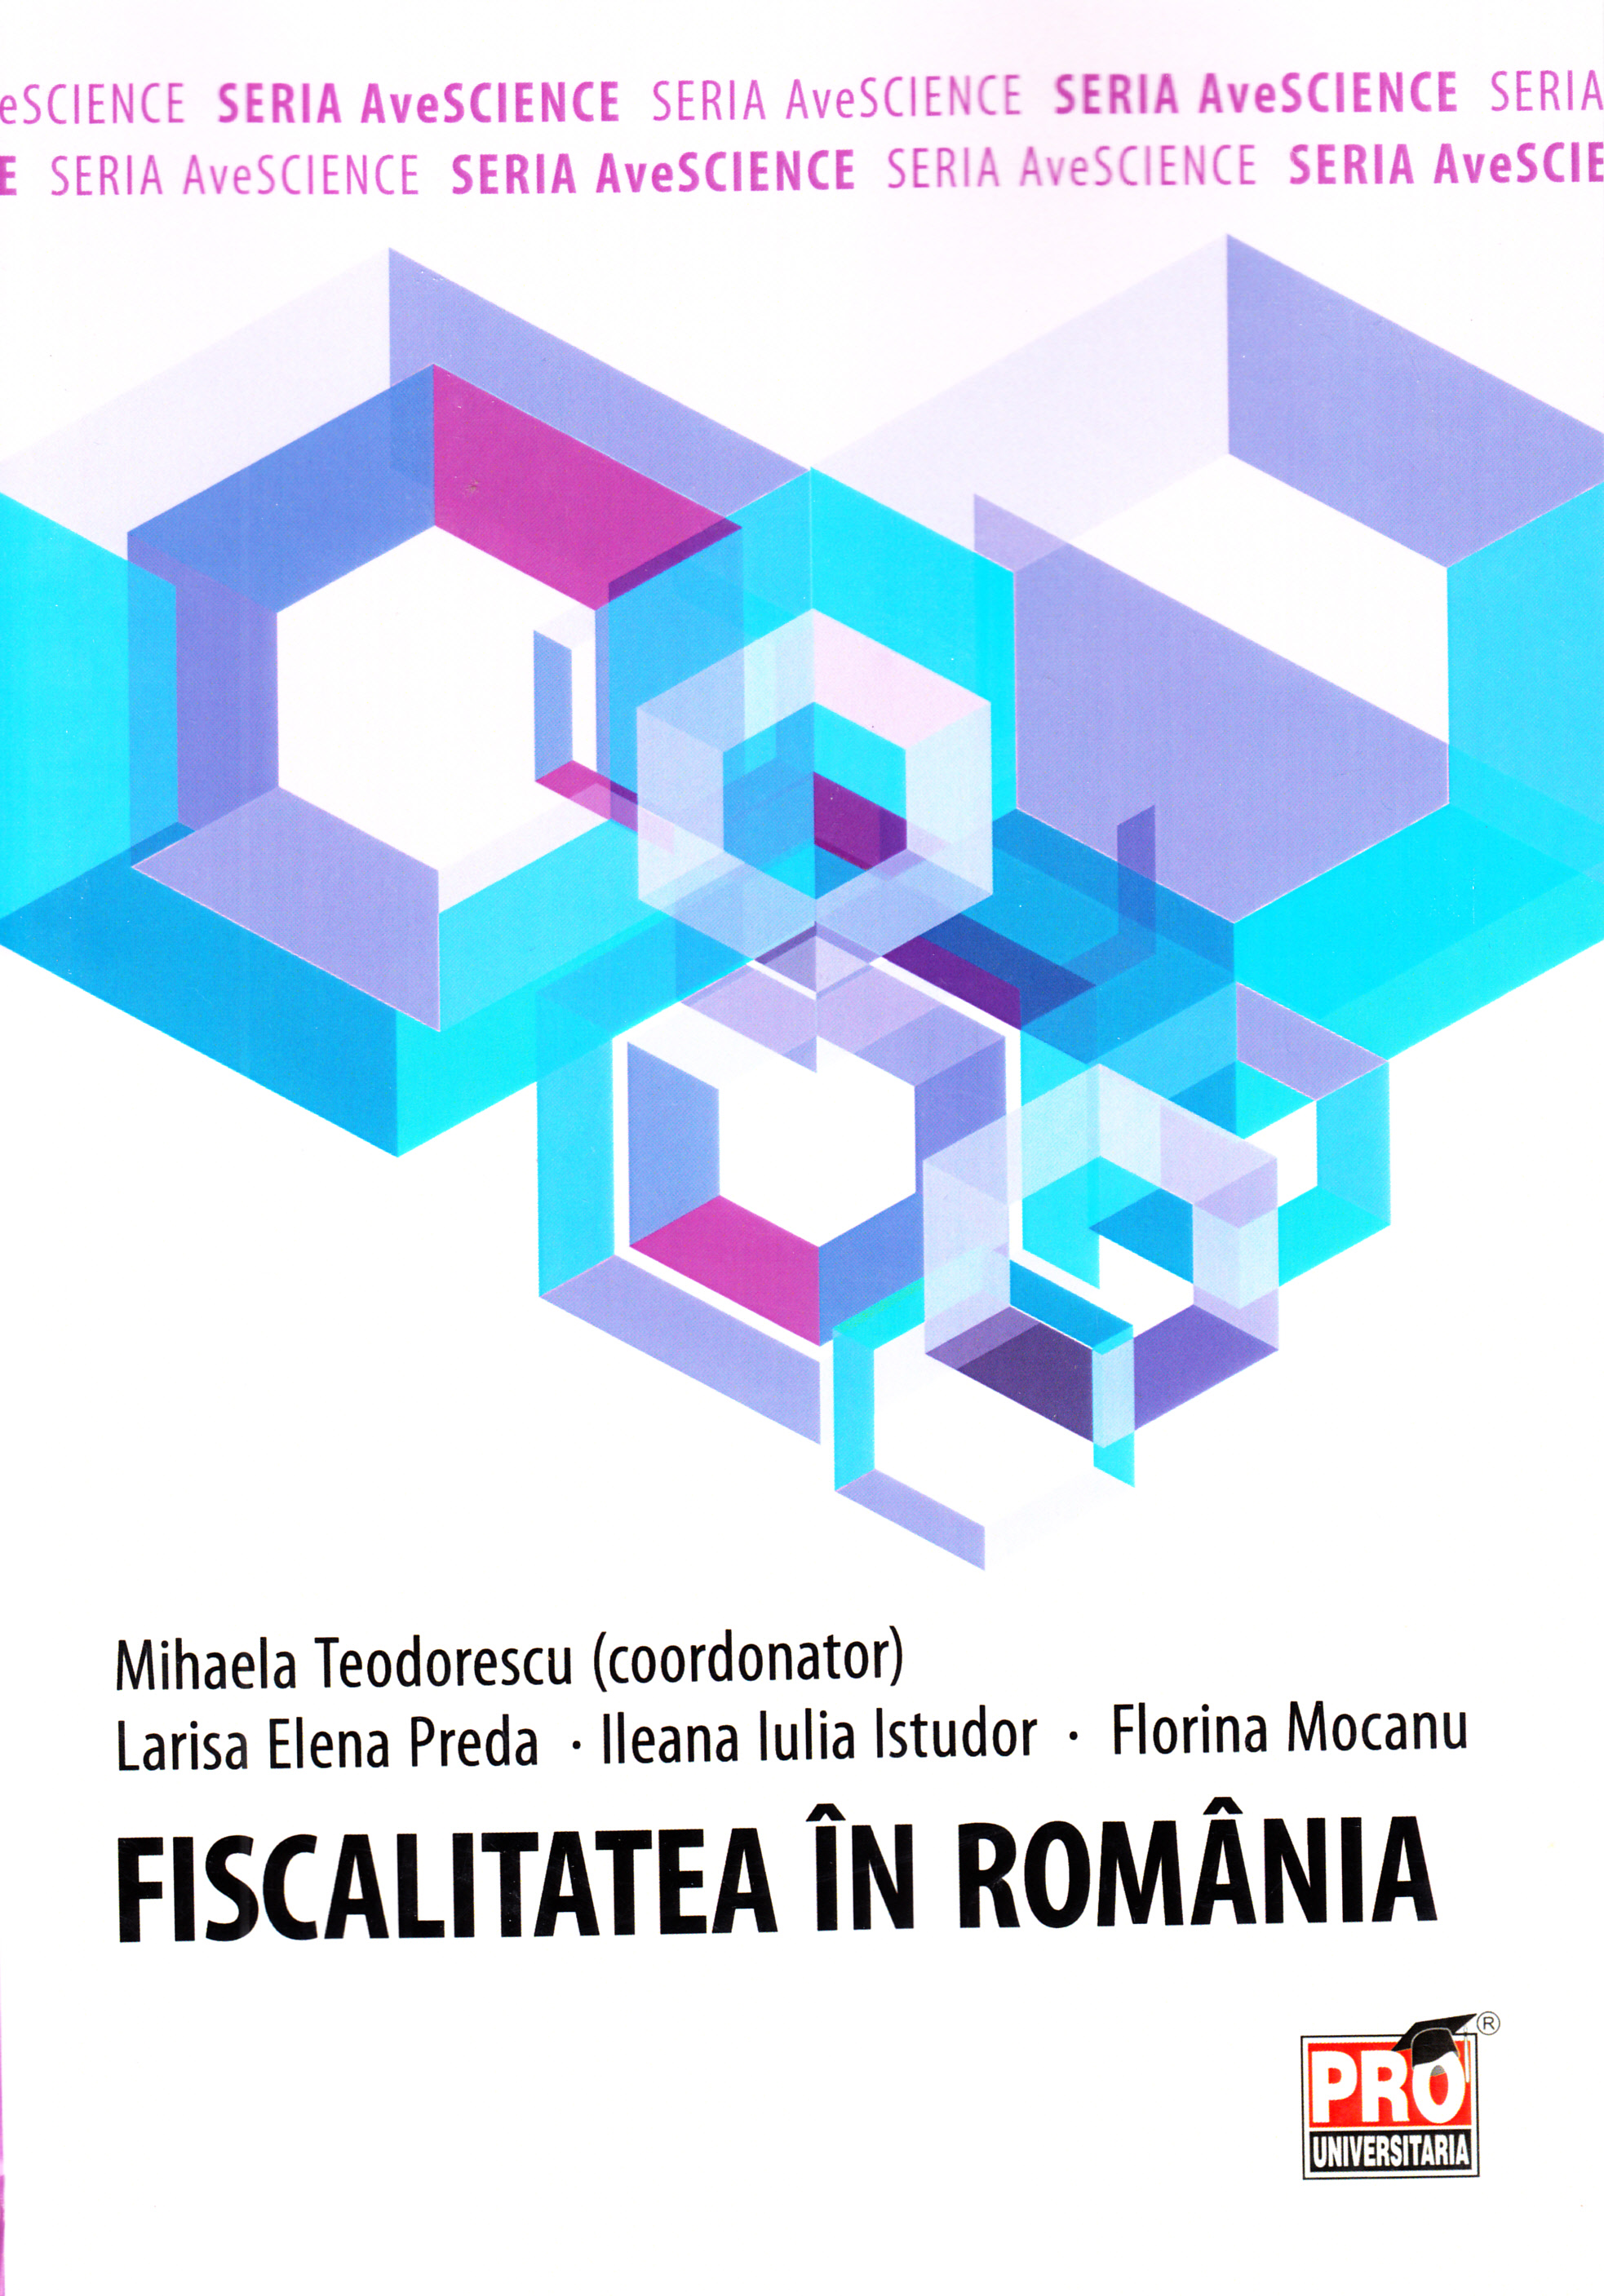 Fiscalitatea in Romania - Mihaela Teodorescu